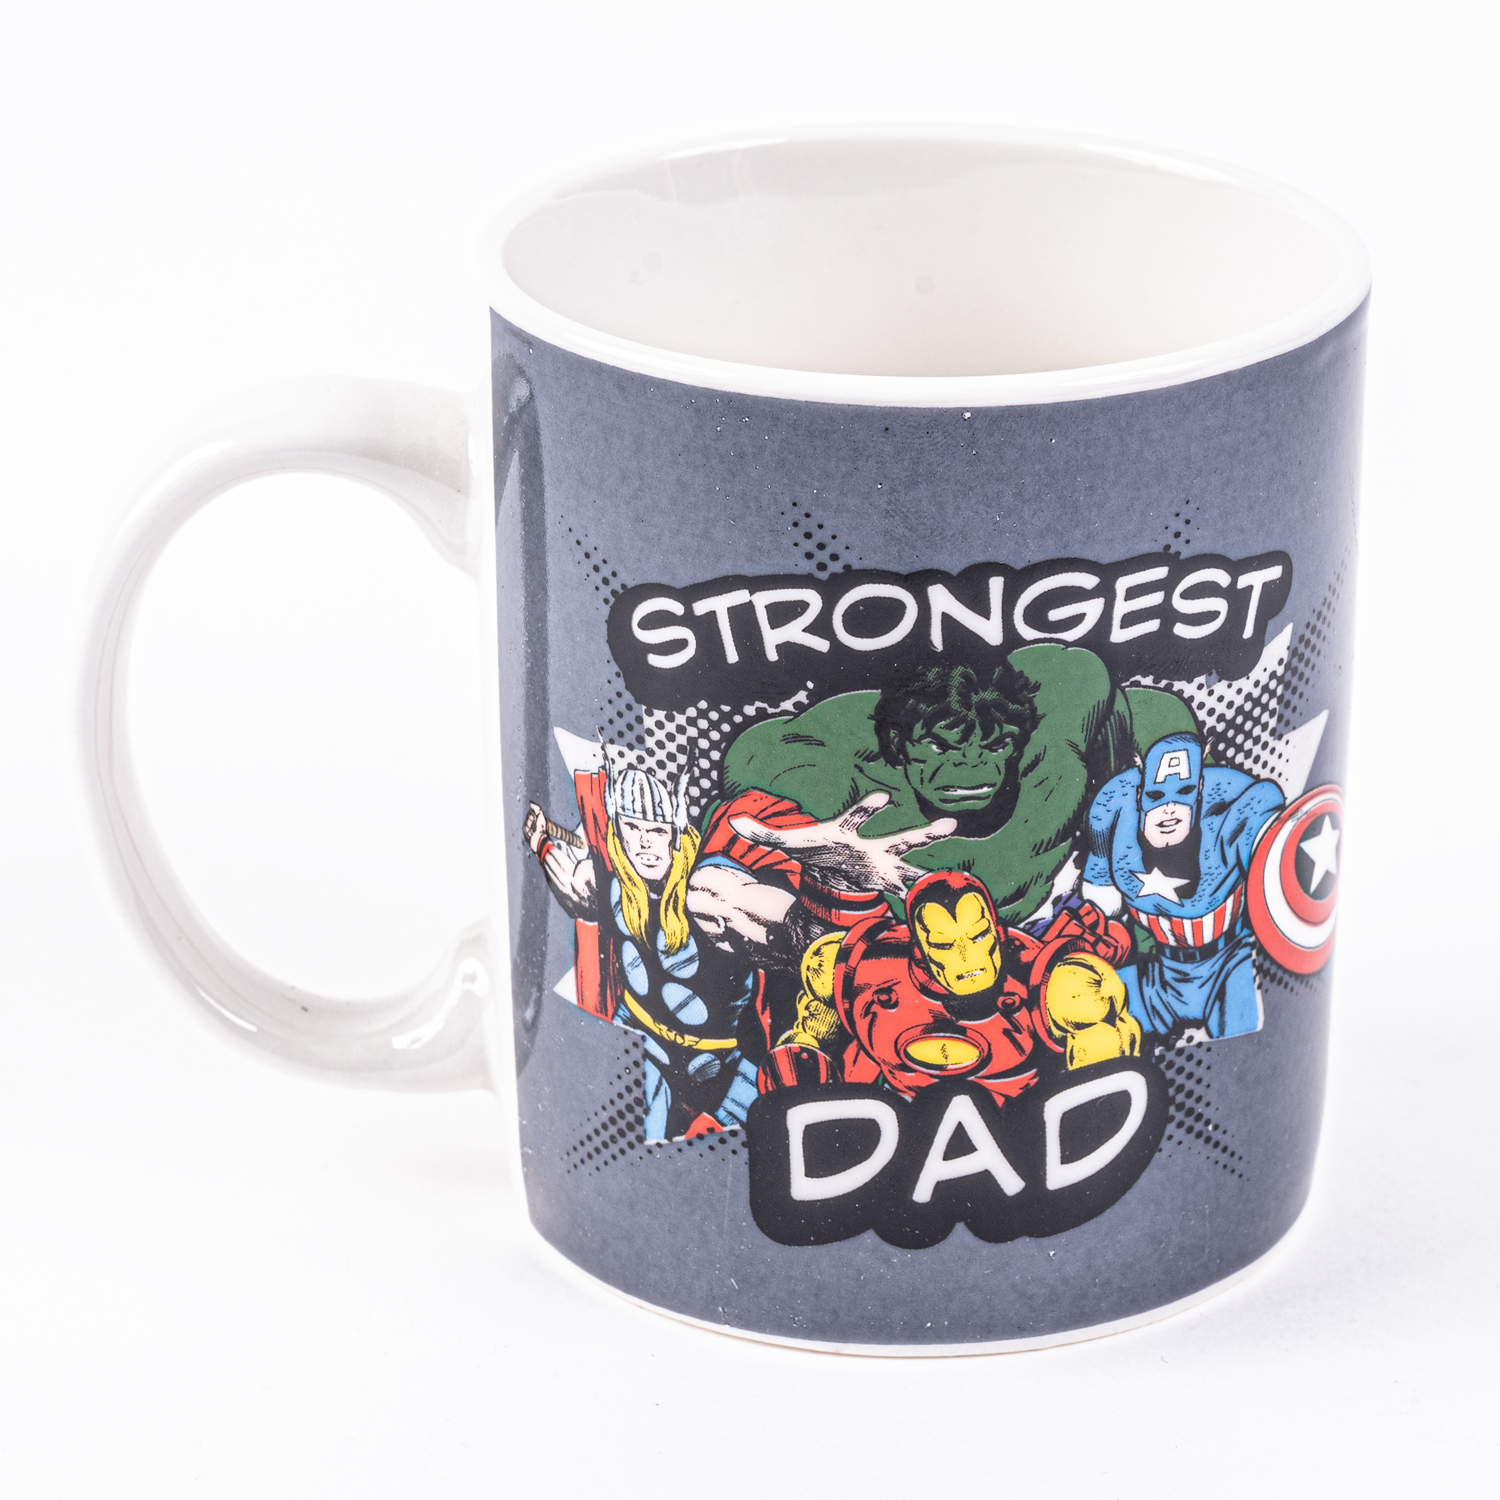 Ceramic mug in gift box - Marvel, strongest dad